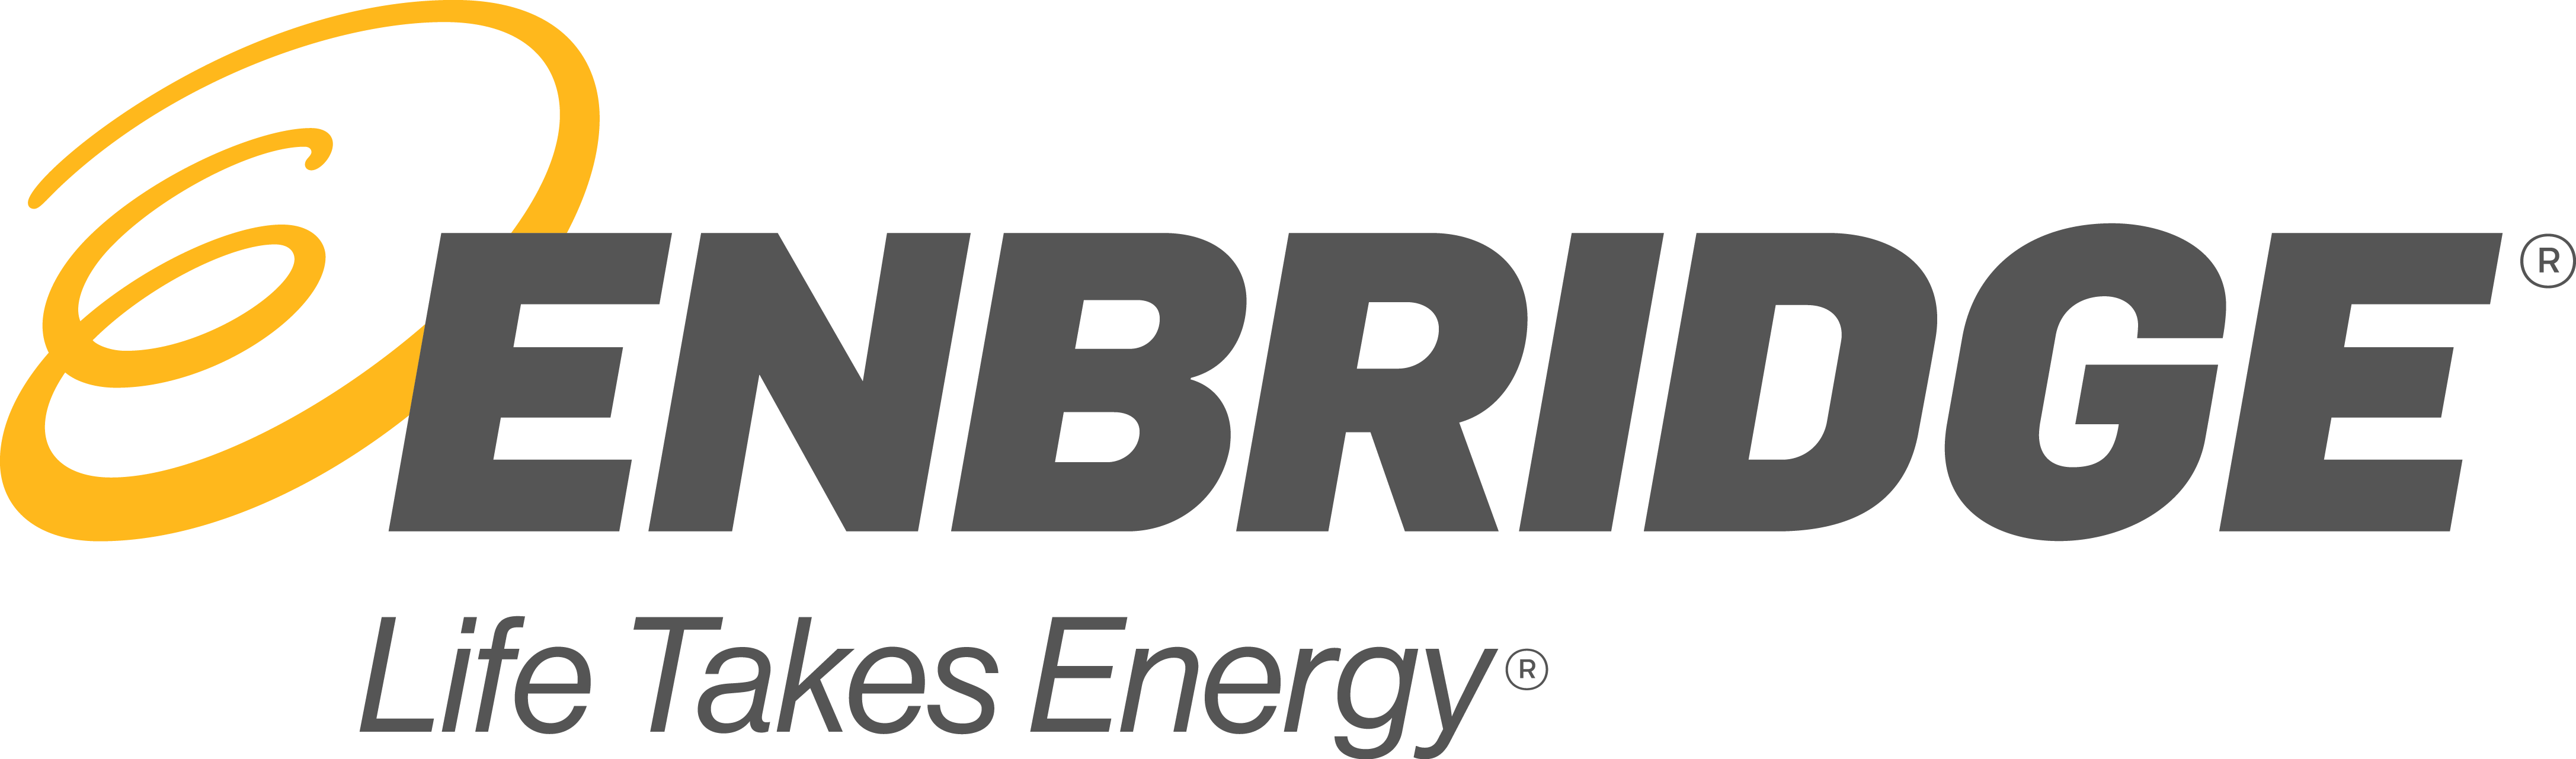 Enbridge logo. Life Takes Energy